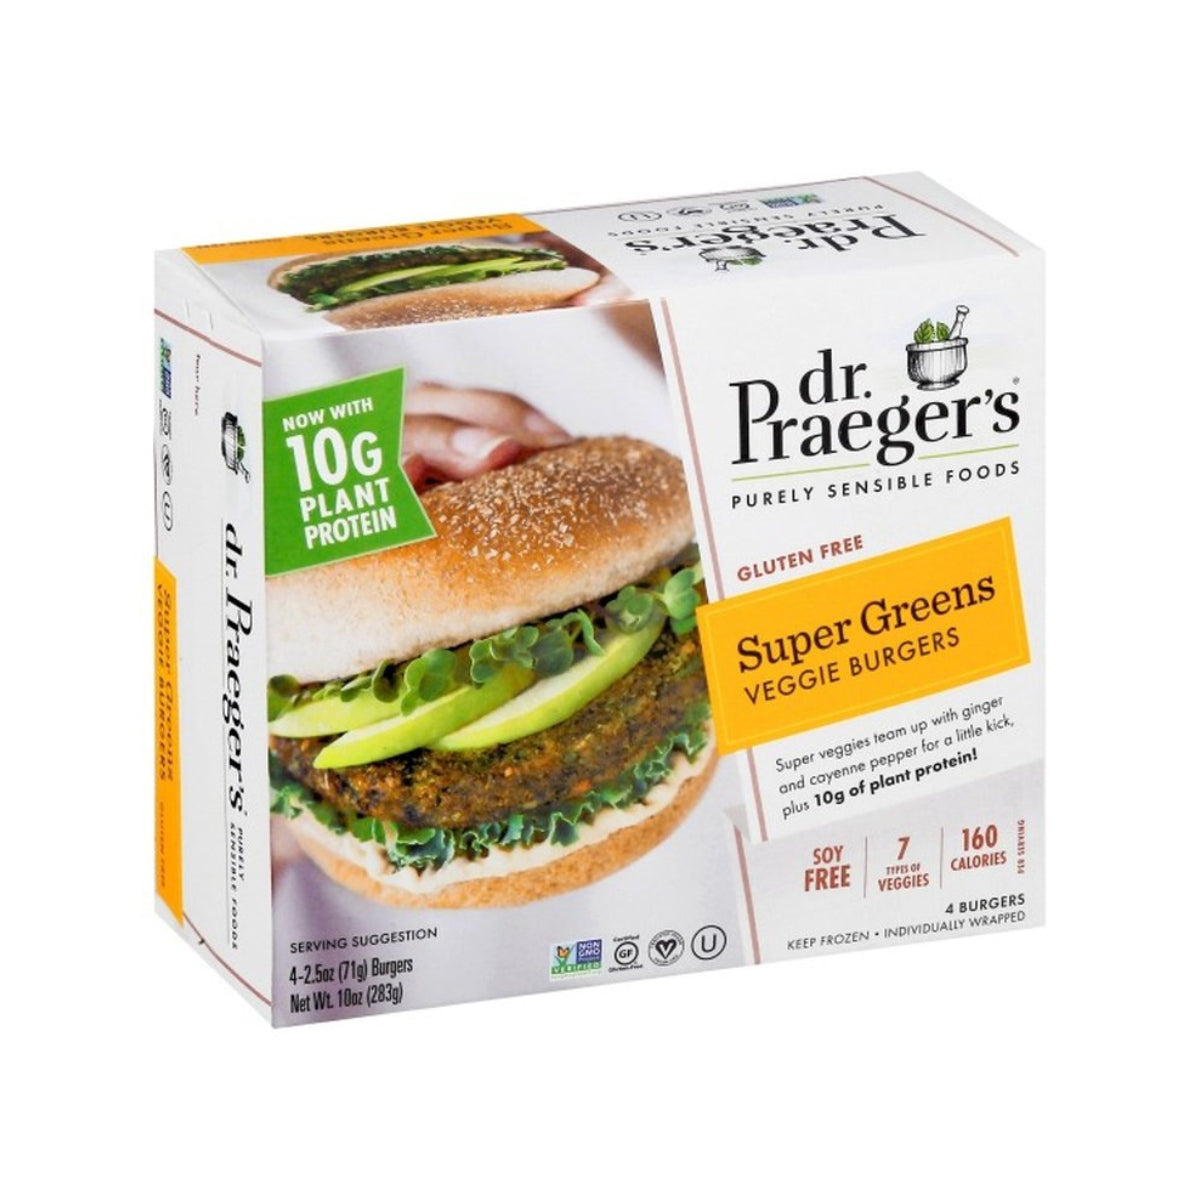 Super Greens Veggie Burger 283g